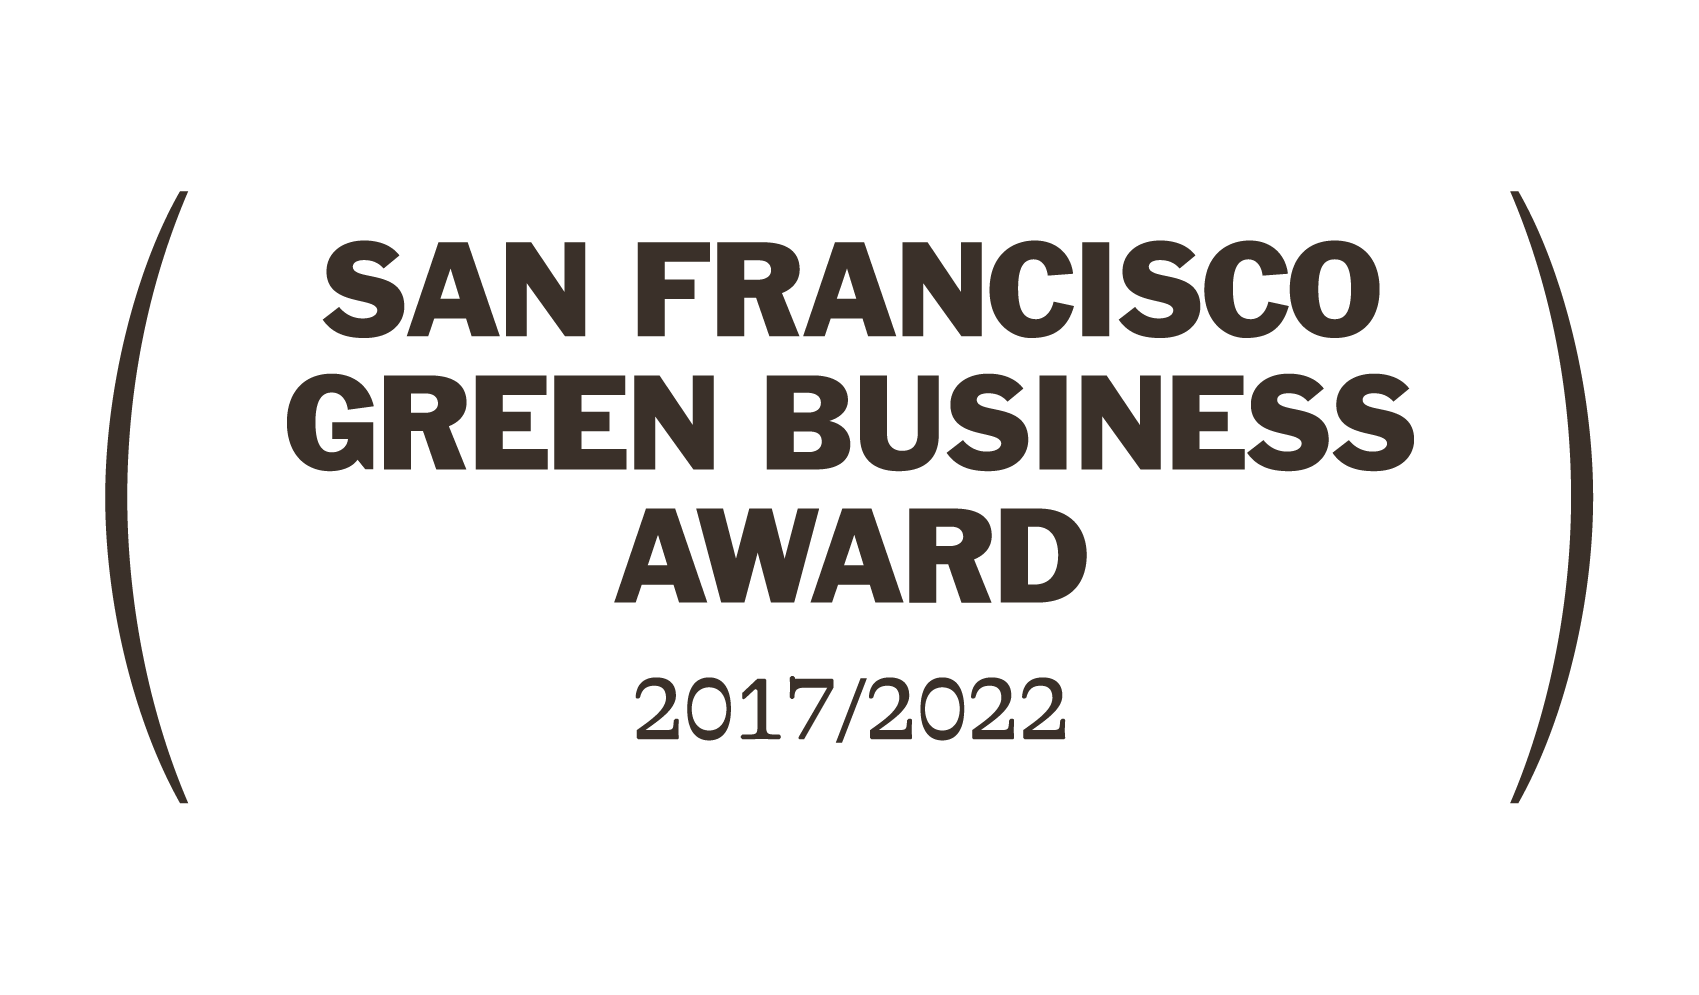 SAN FRANCISCO GREEN BUSINESS AWARD